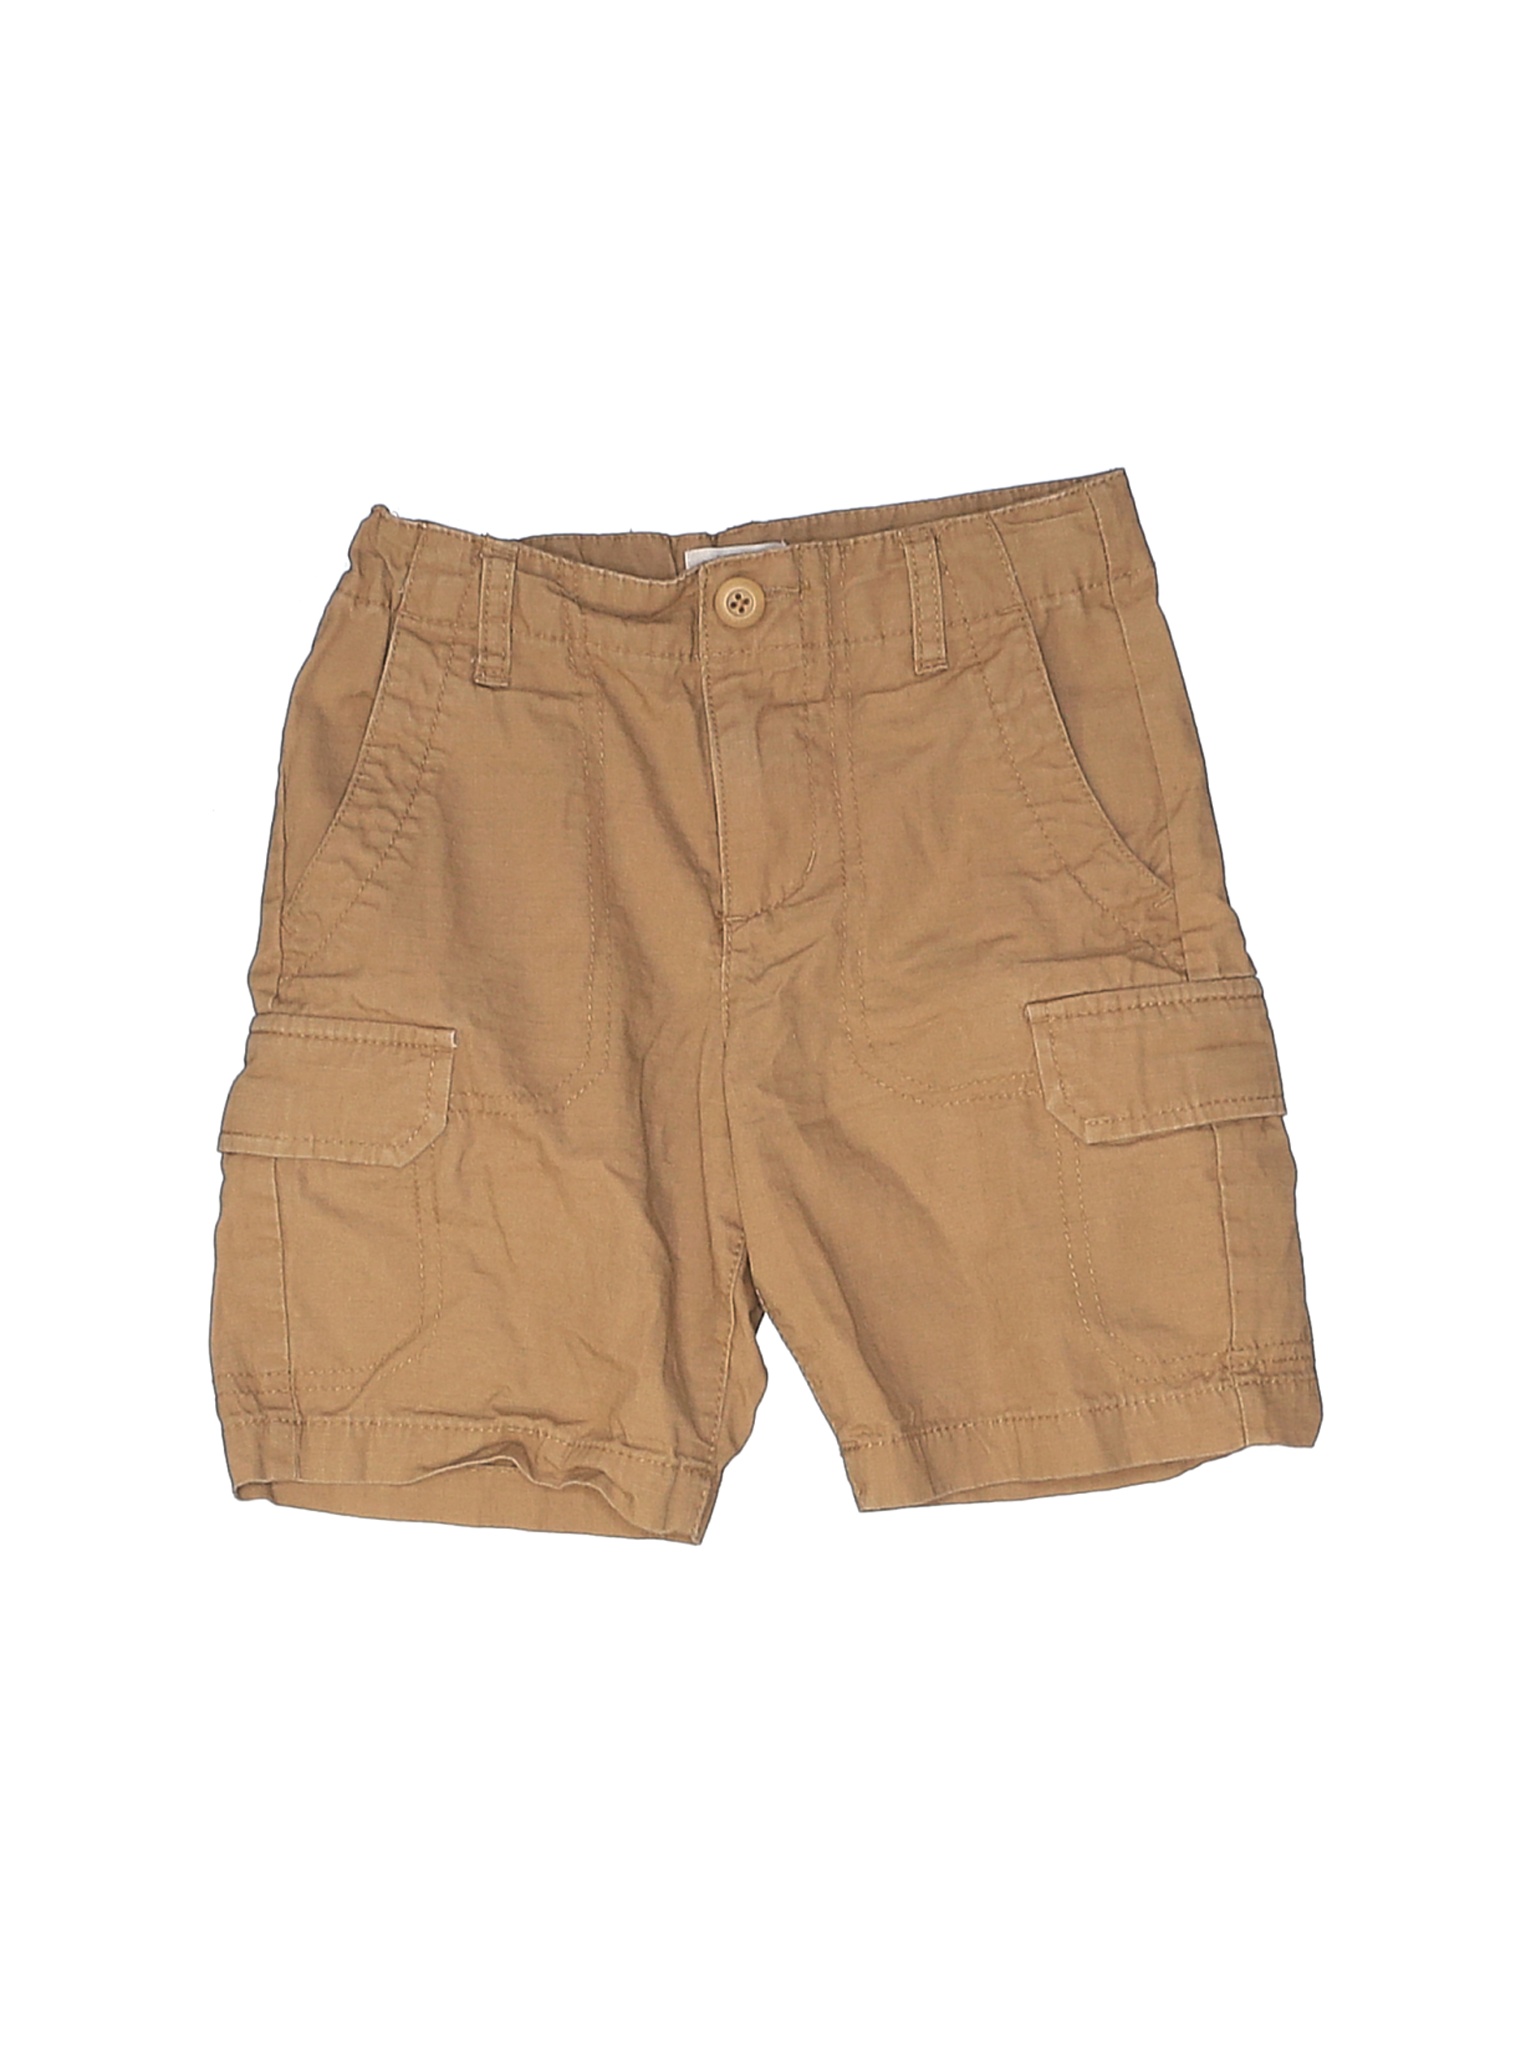 Old Navy Boys Brown Cargo Shorts 6 | eBay